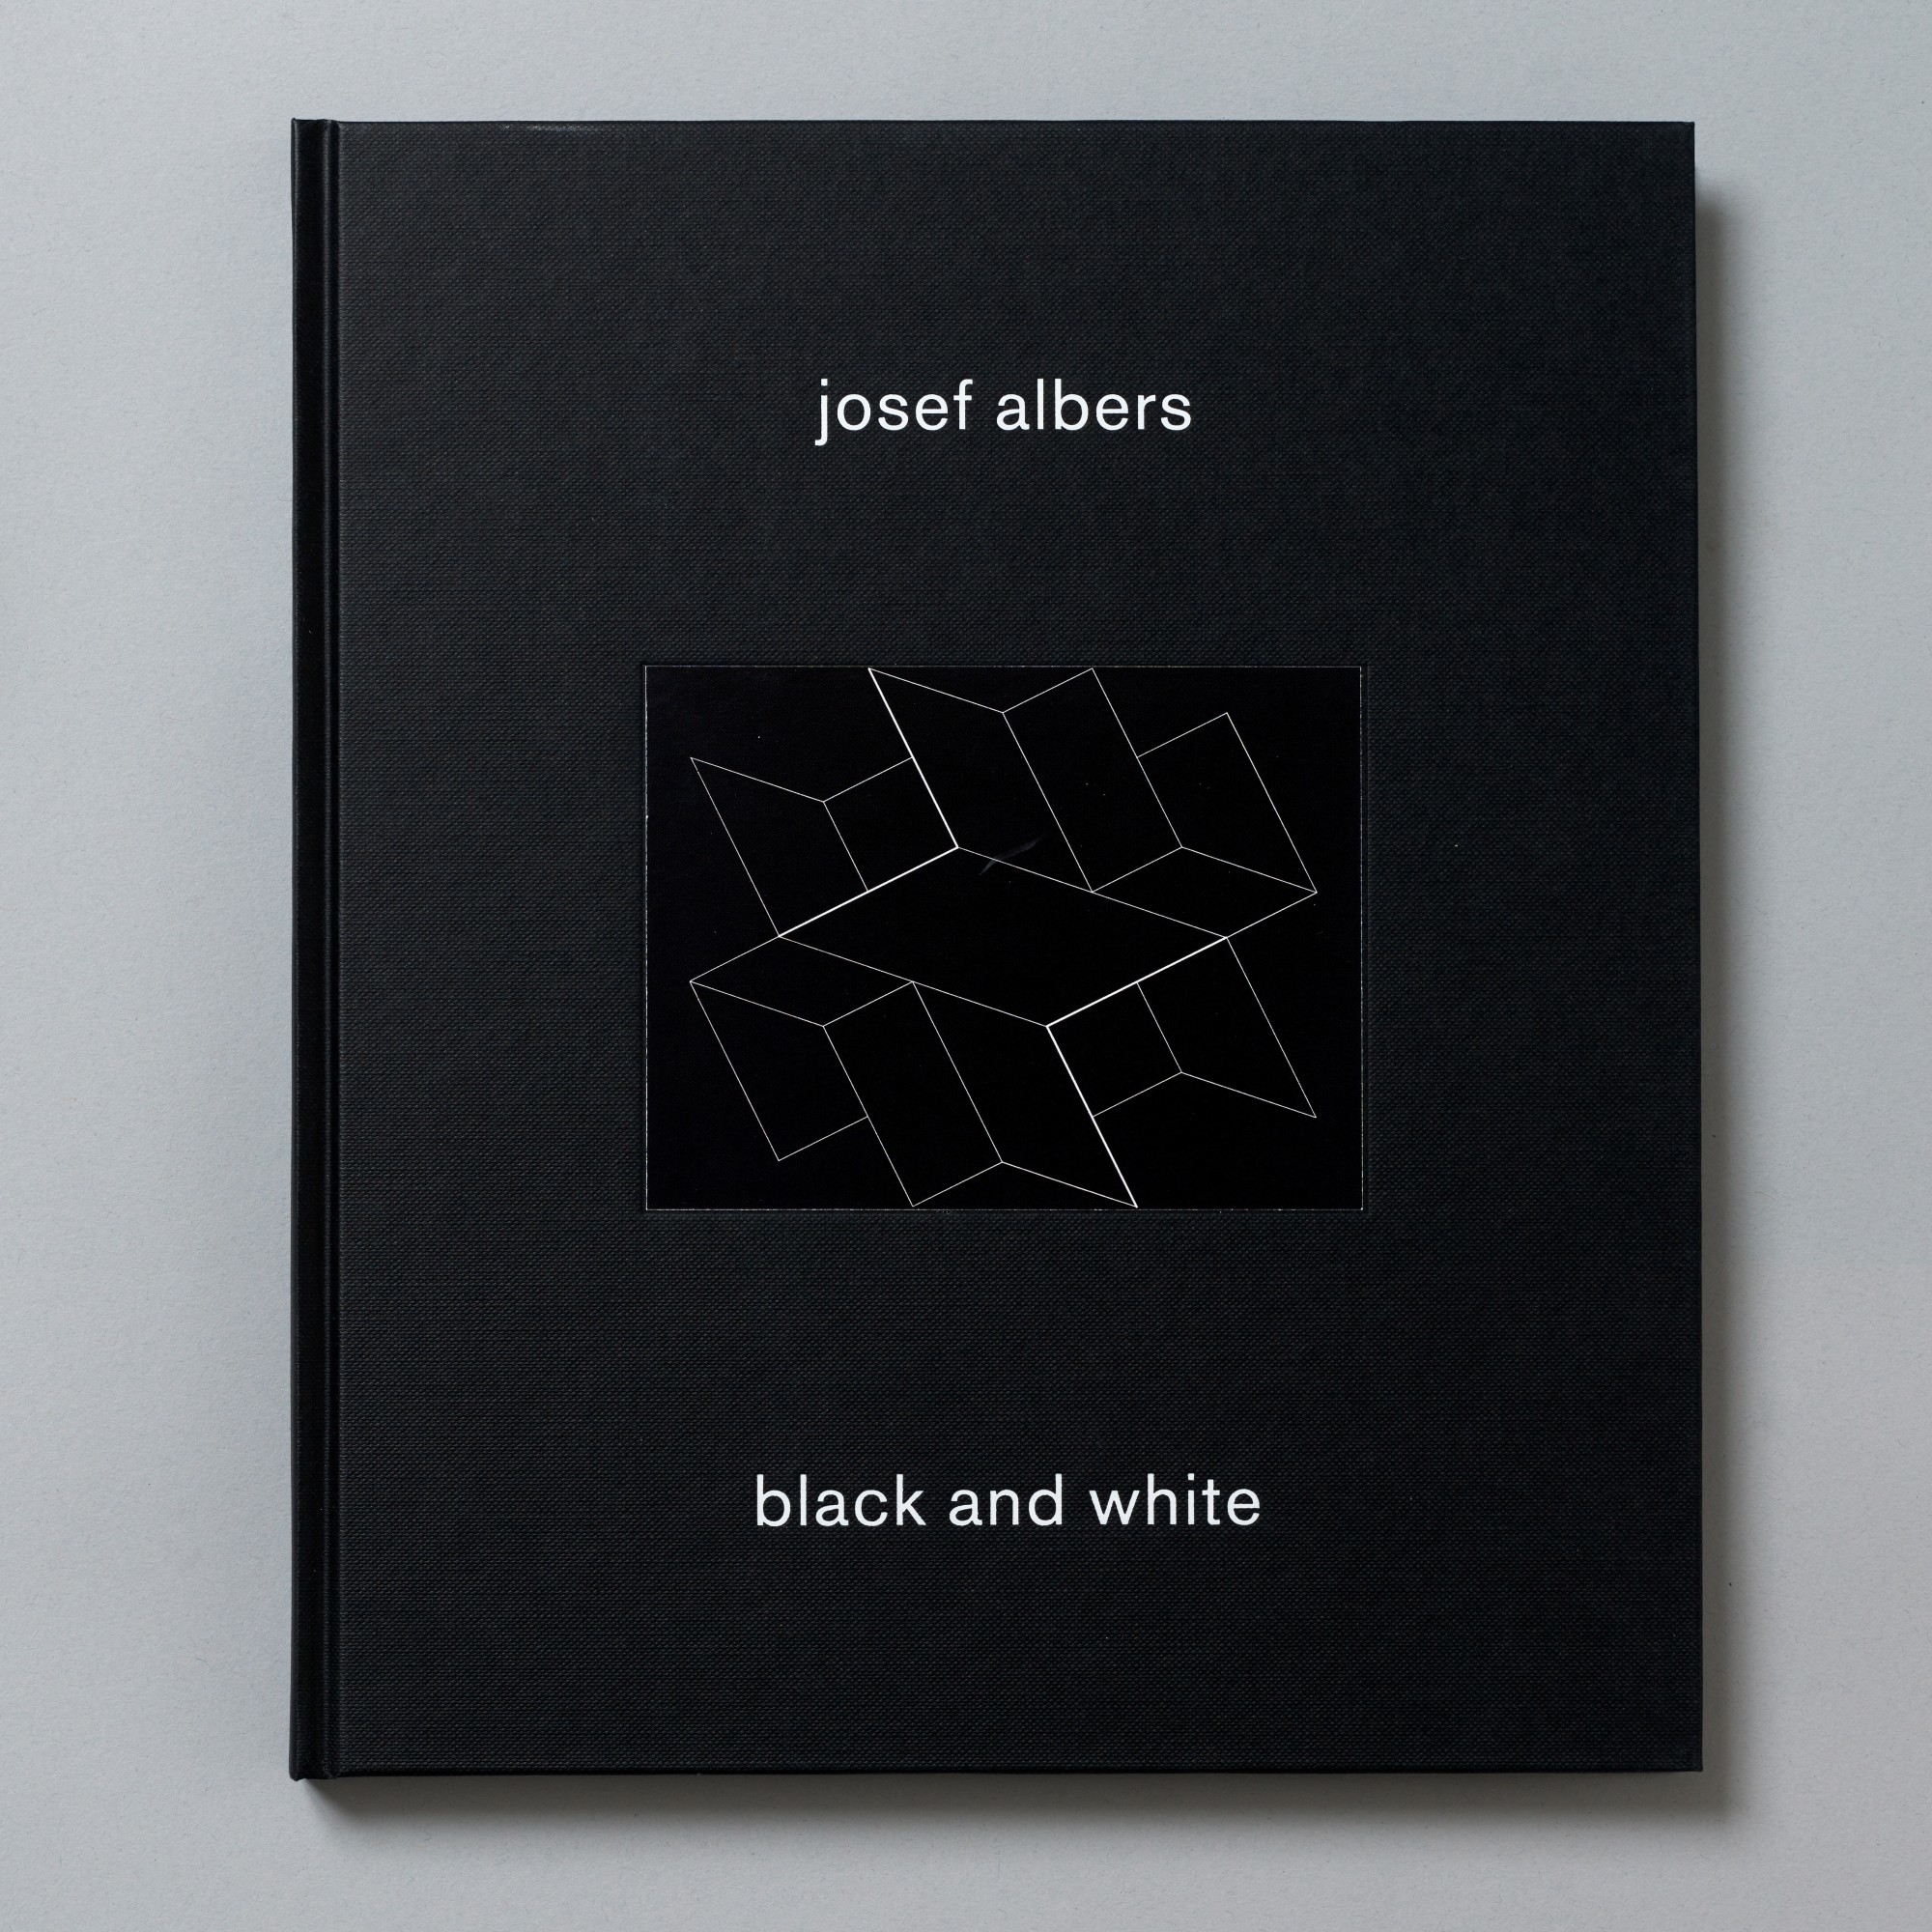 Publication: Josef Albers - Black and White | Waddington Custot